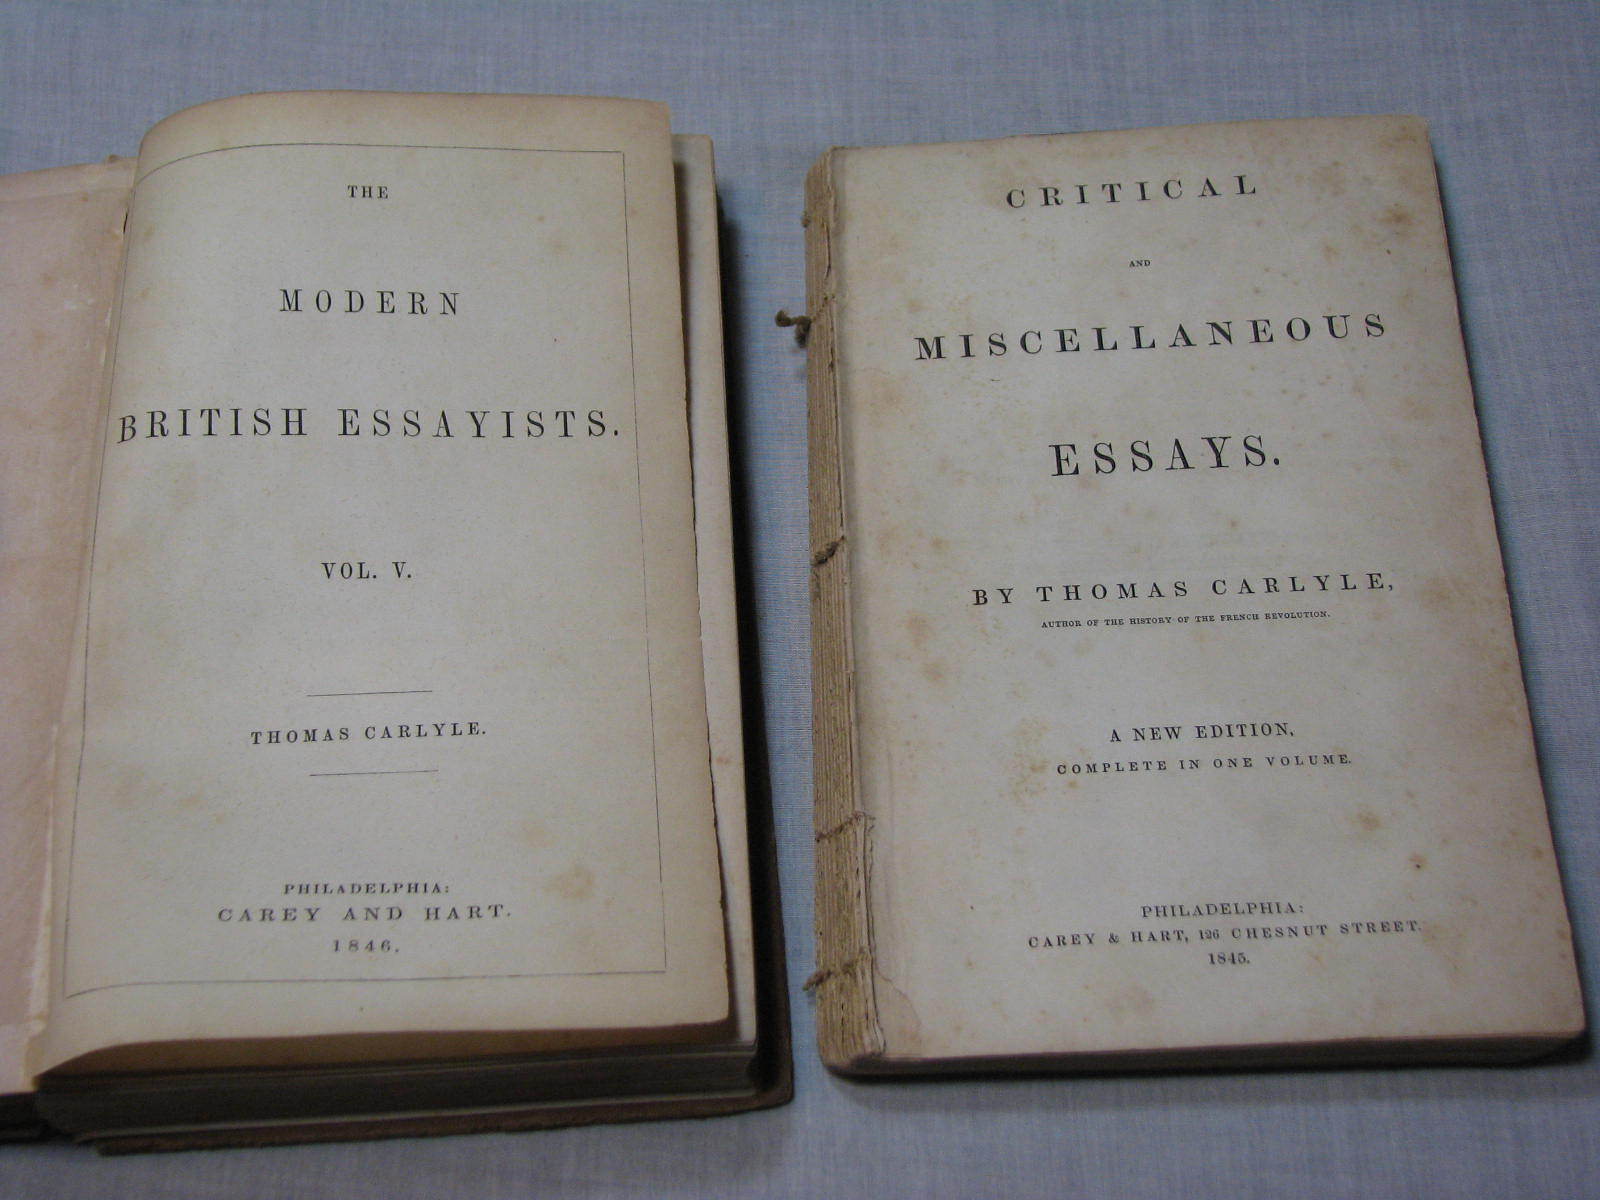 1846 The Modern British Essayist Antique Book Thomas Carlyle Critical Essays old